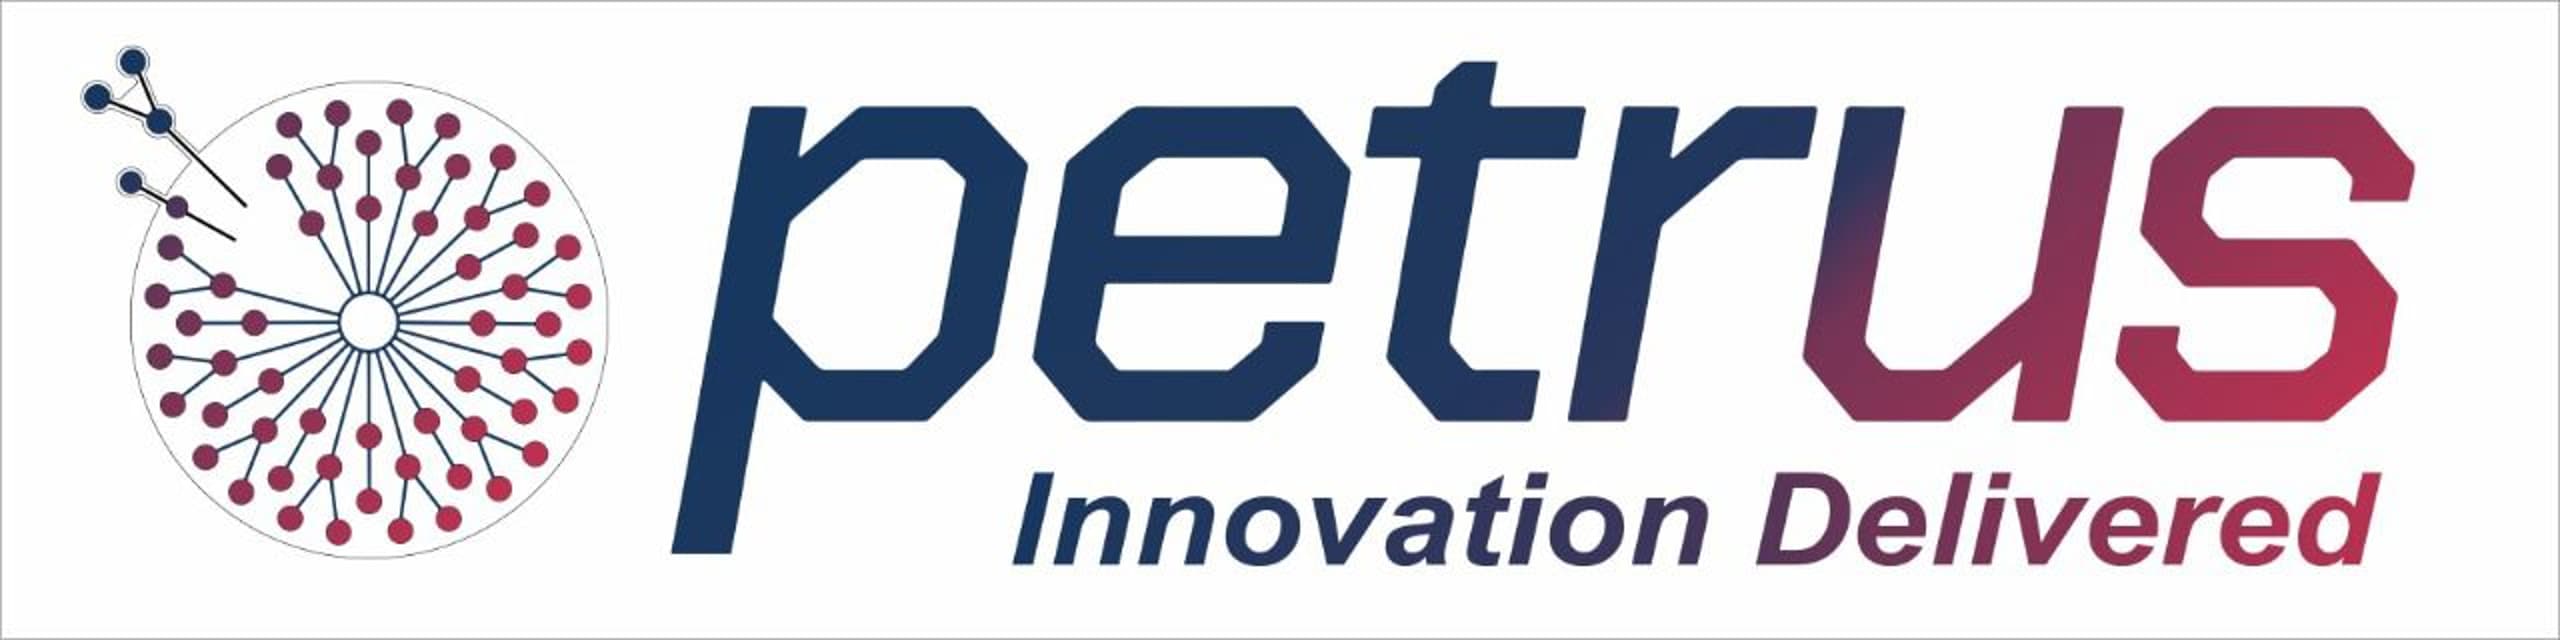 Petrus Technologies's logo